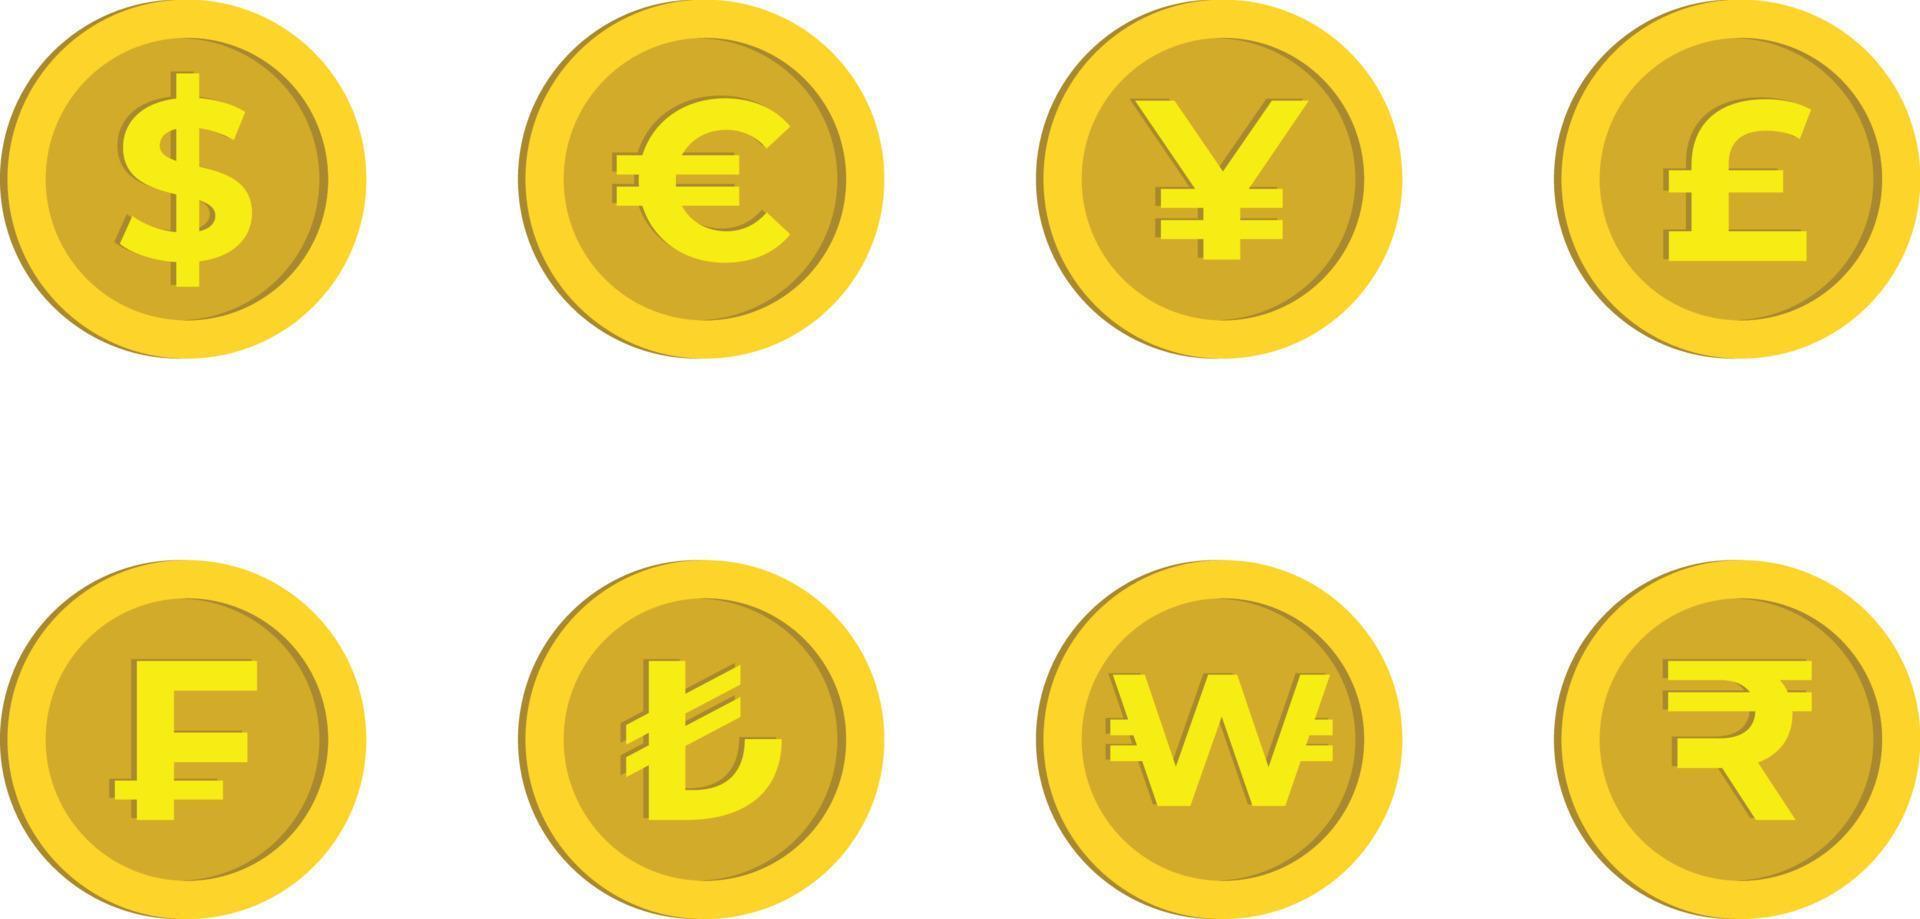 Dollar, Euro, Yen, Pound, Franc, Turkish Lira, Won and Rupee Sign Gold Cartoon Coin, Money Currency vector